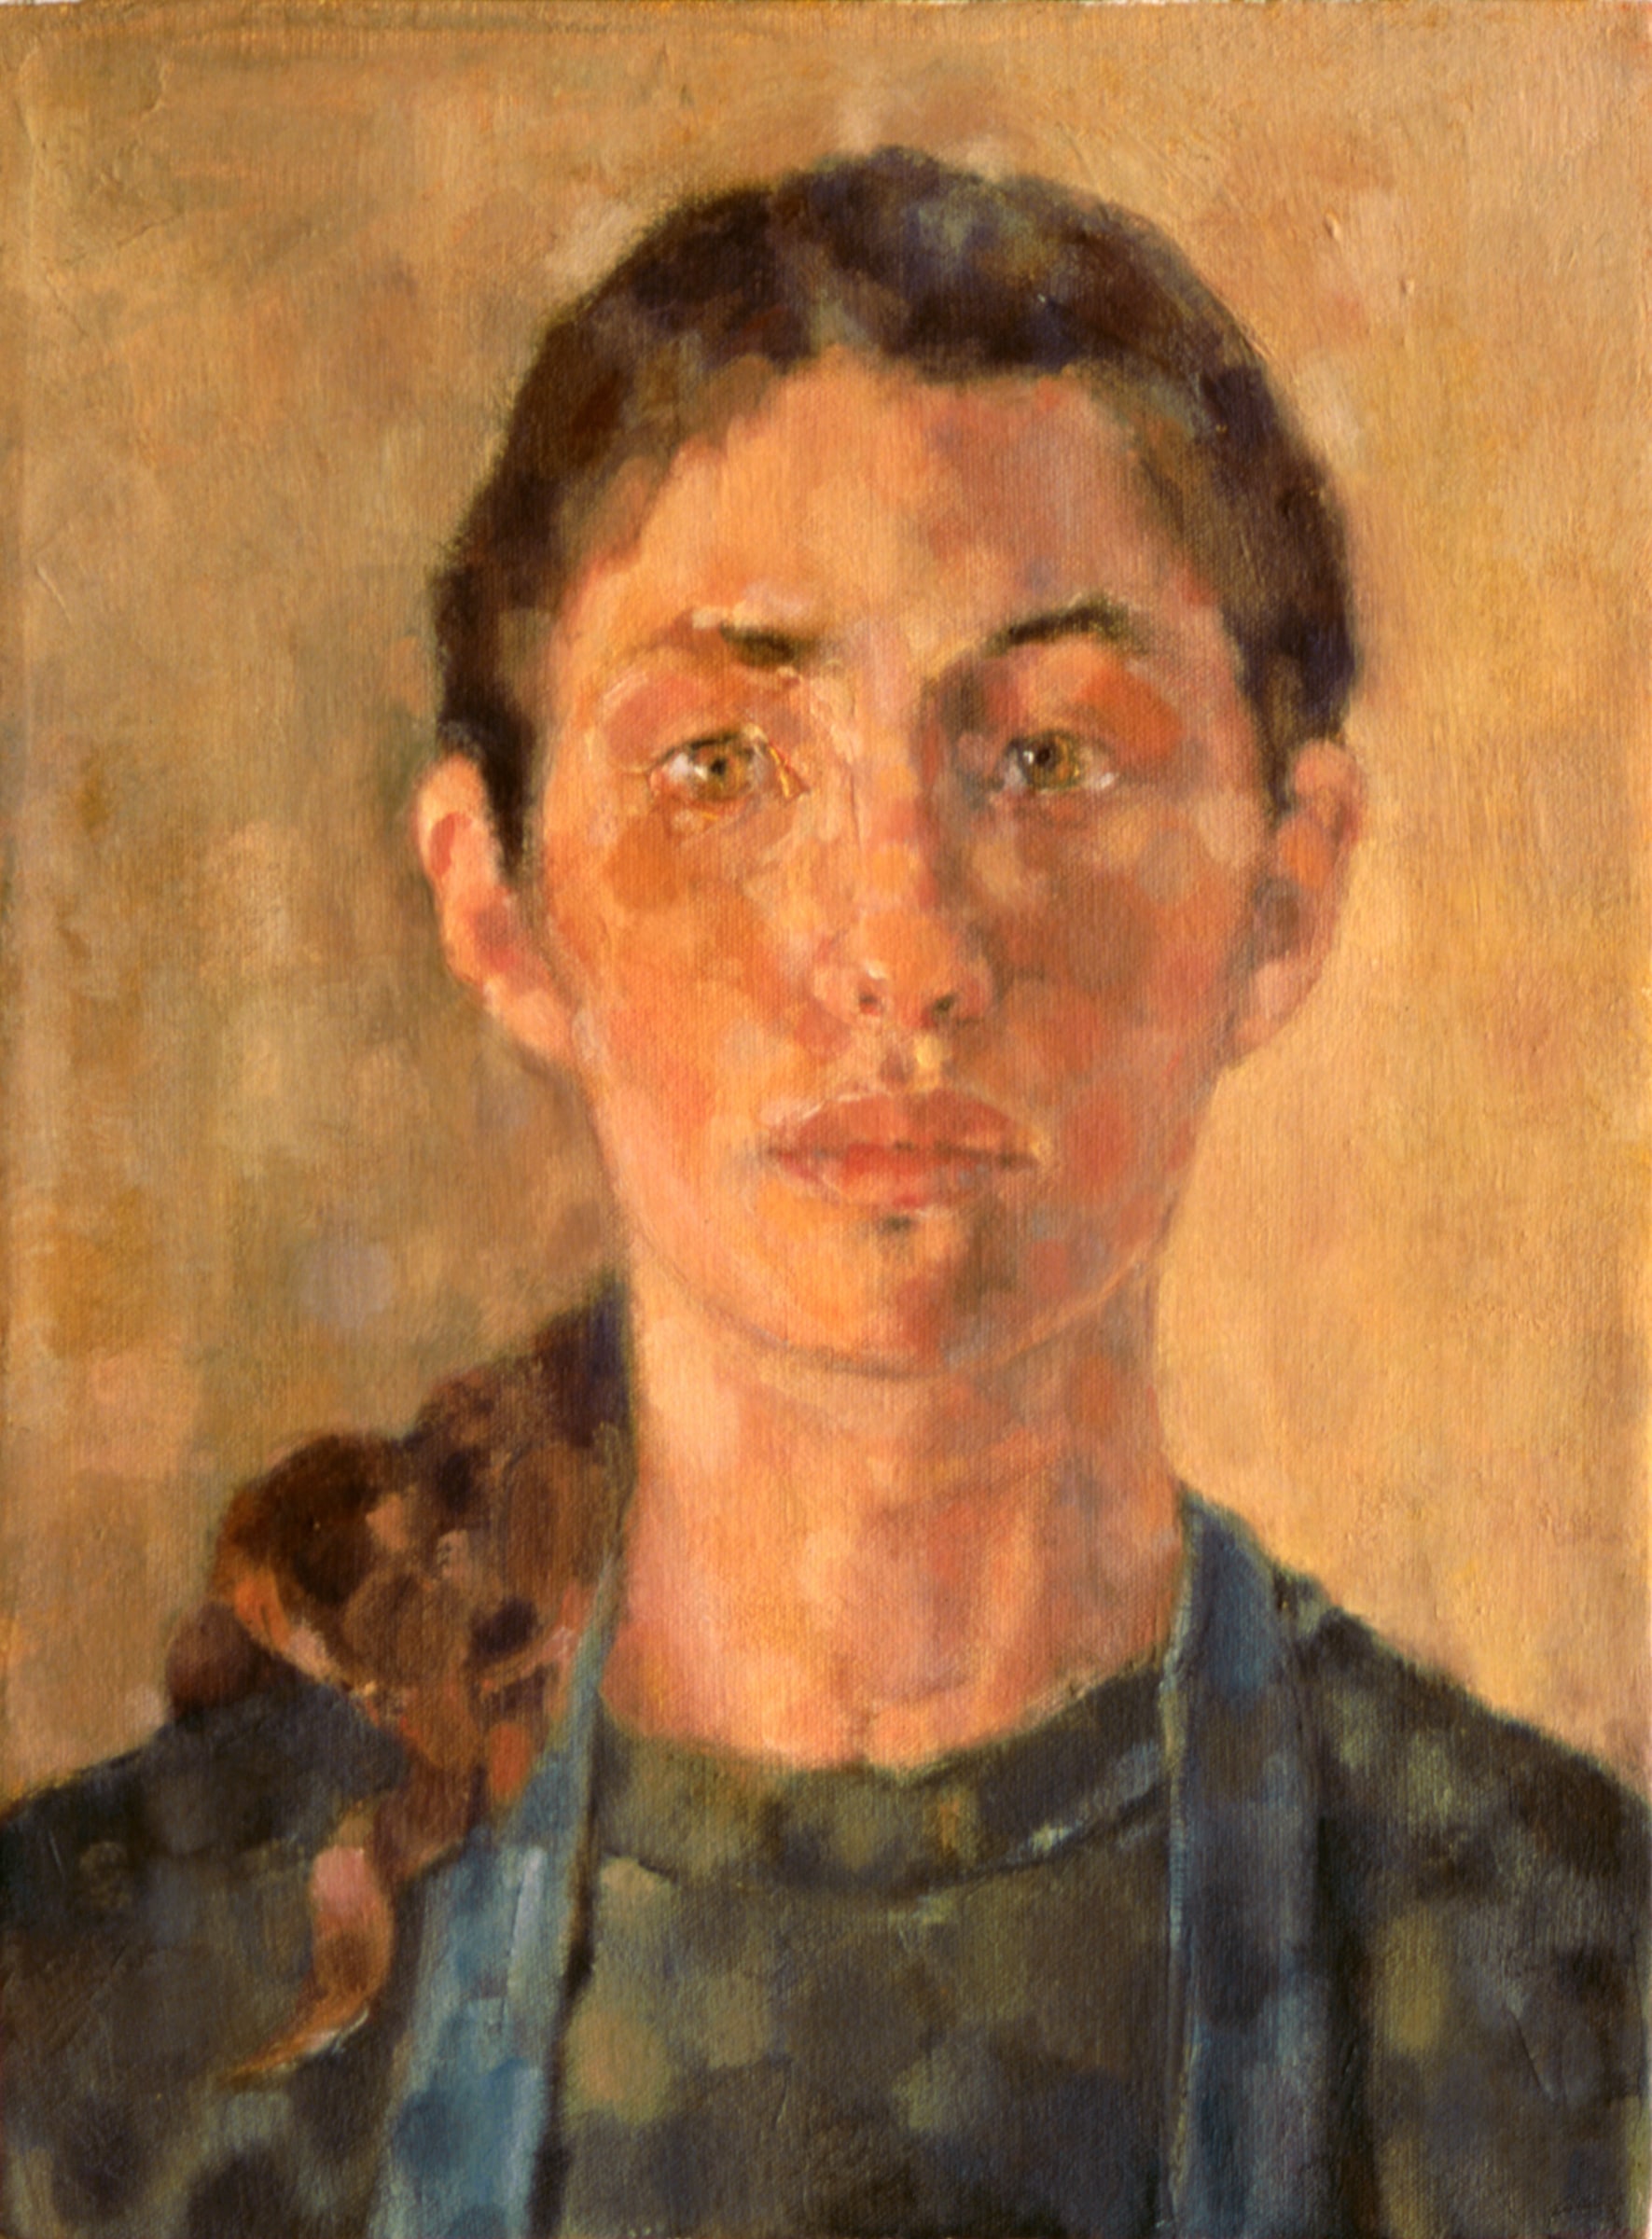 Jennifer Guidi
Untitled (Self-Portrait),&amp;nbsp;1993
Oil on canvas
16 x 12 inches
(40.6 x 30.5 cm)